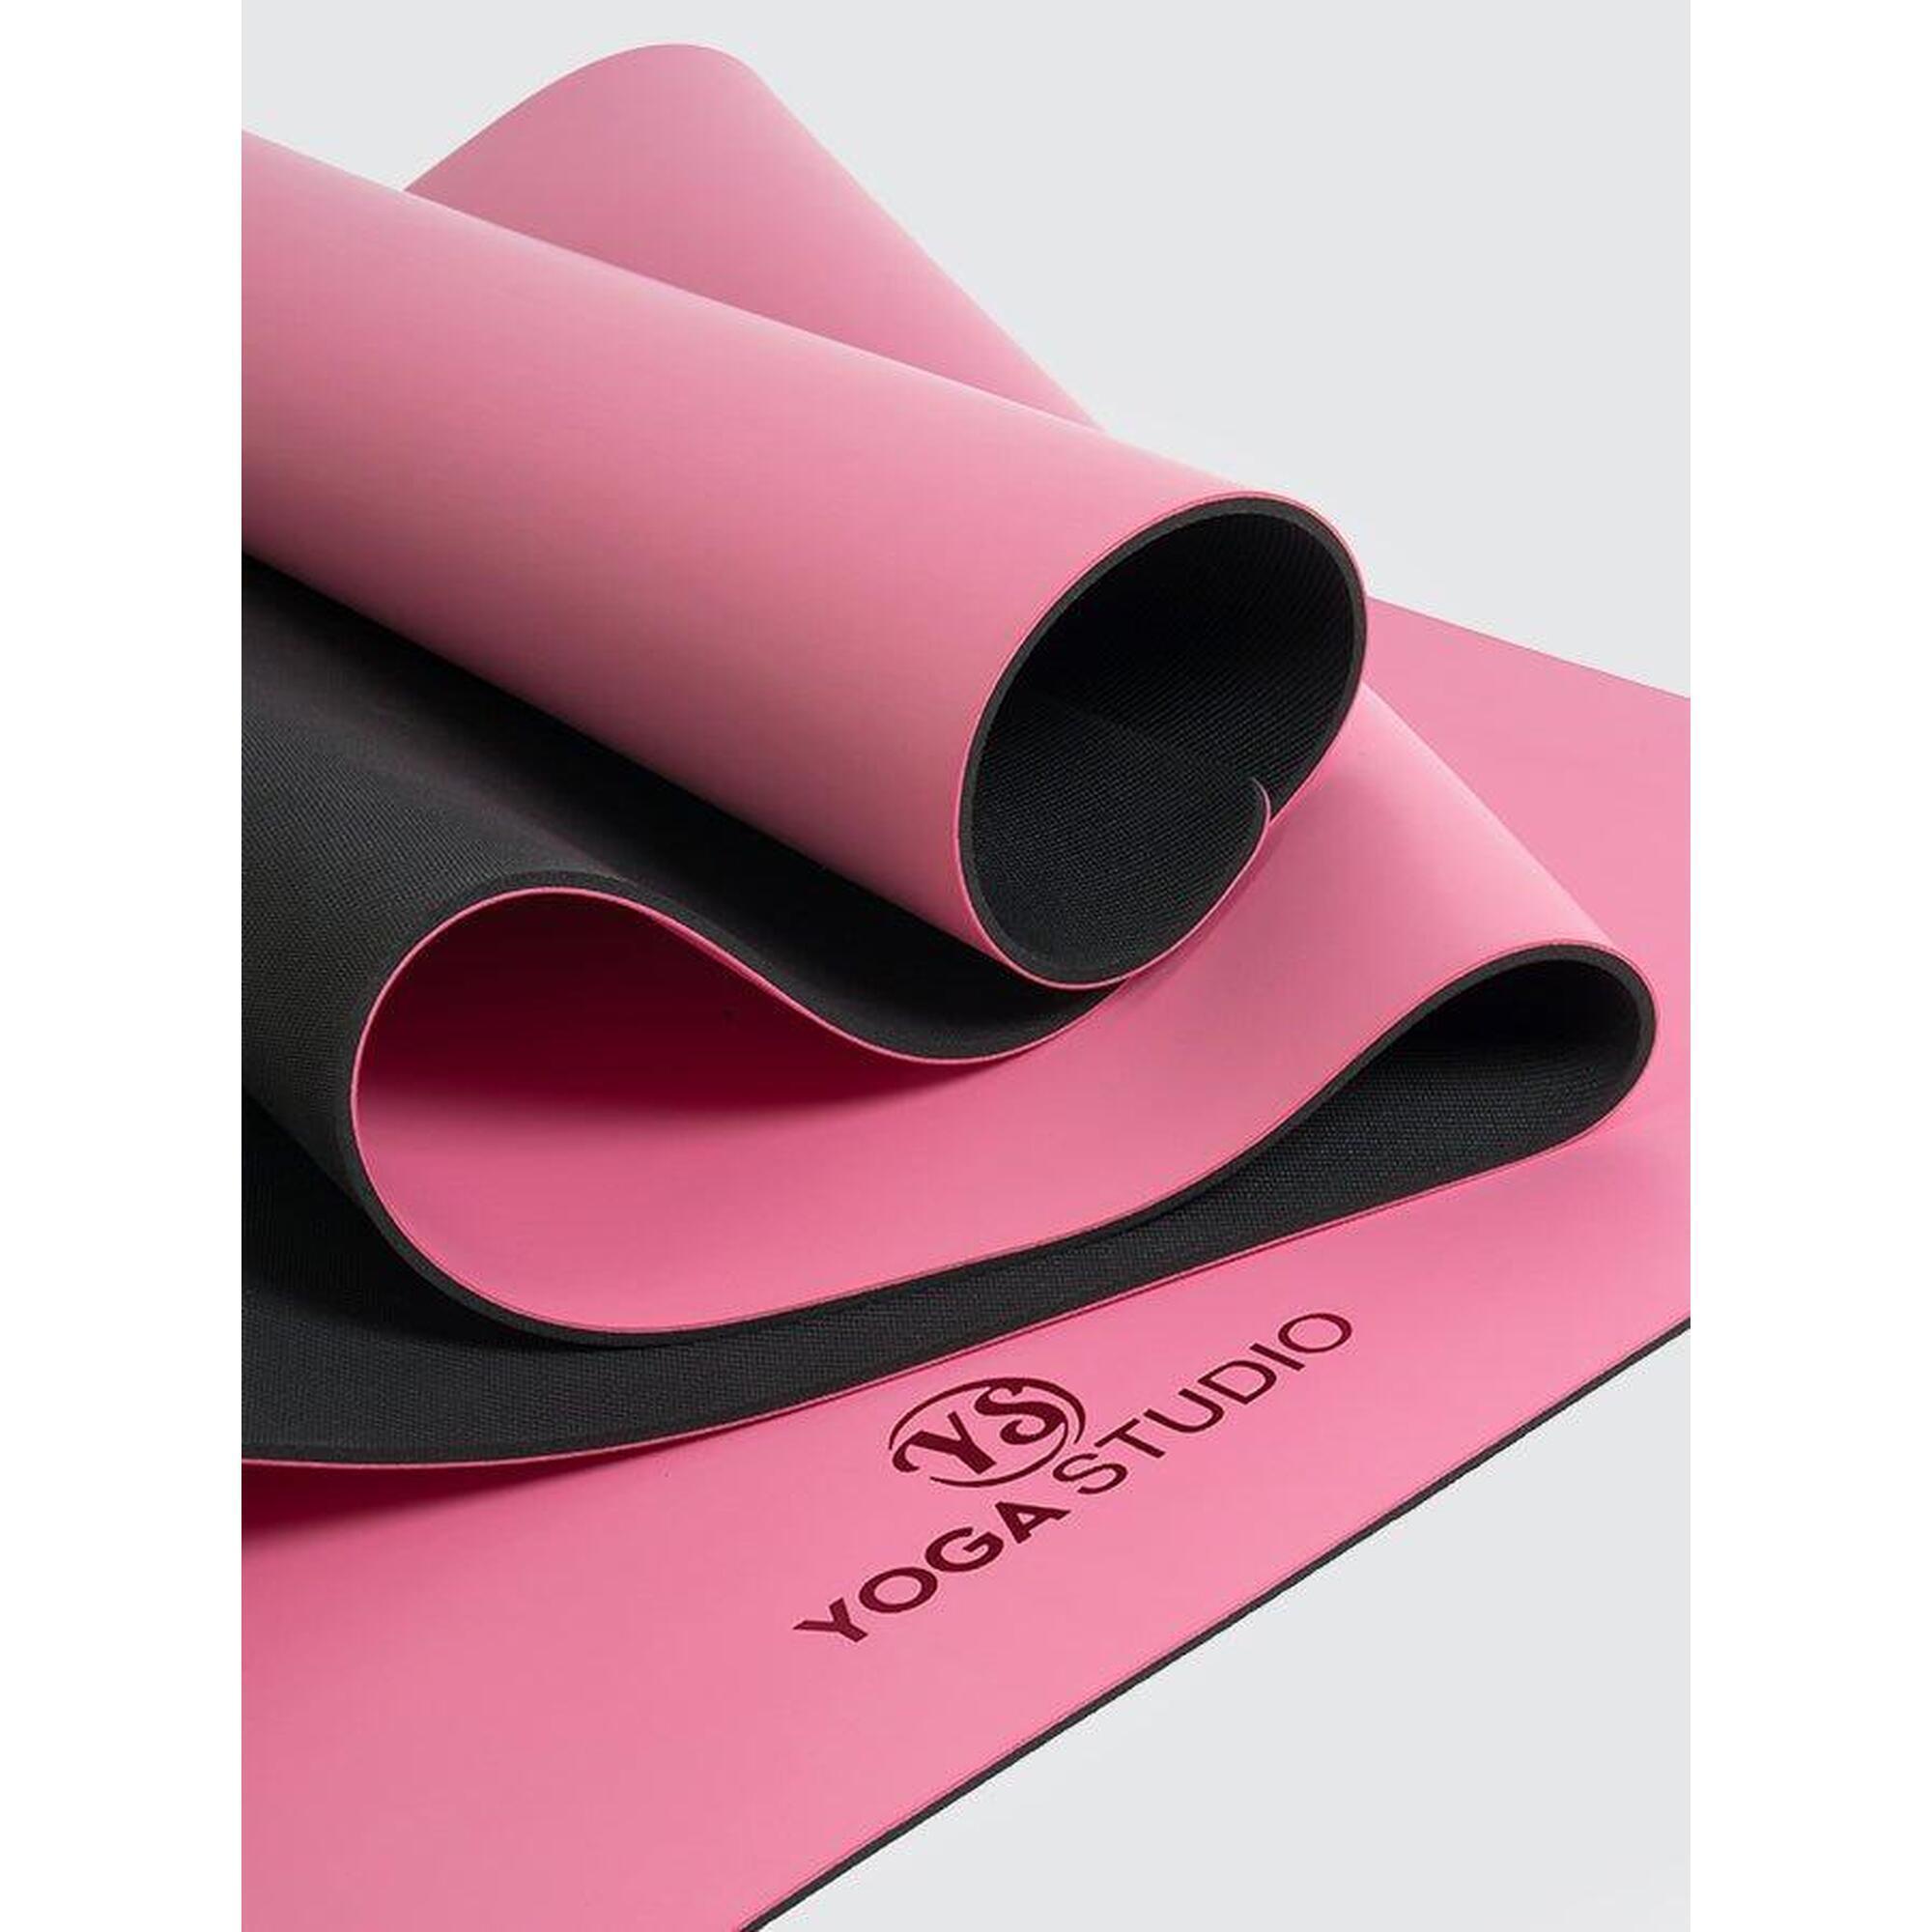 YOGA STUDIO Yoga Studio The Grip Compact Yoga Mat 4mm - Pink